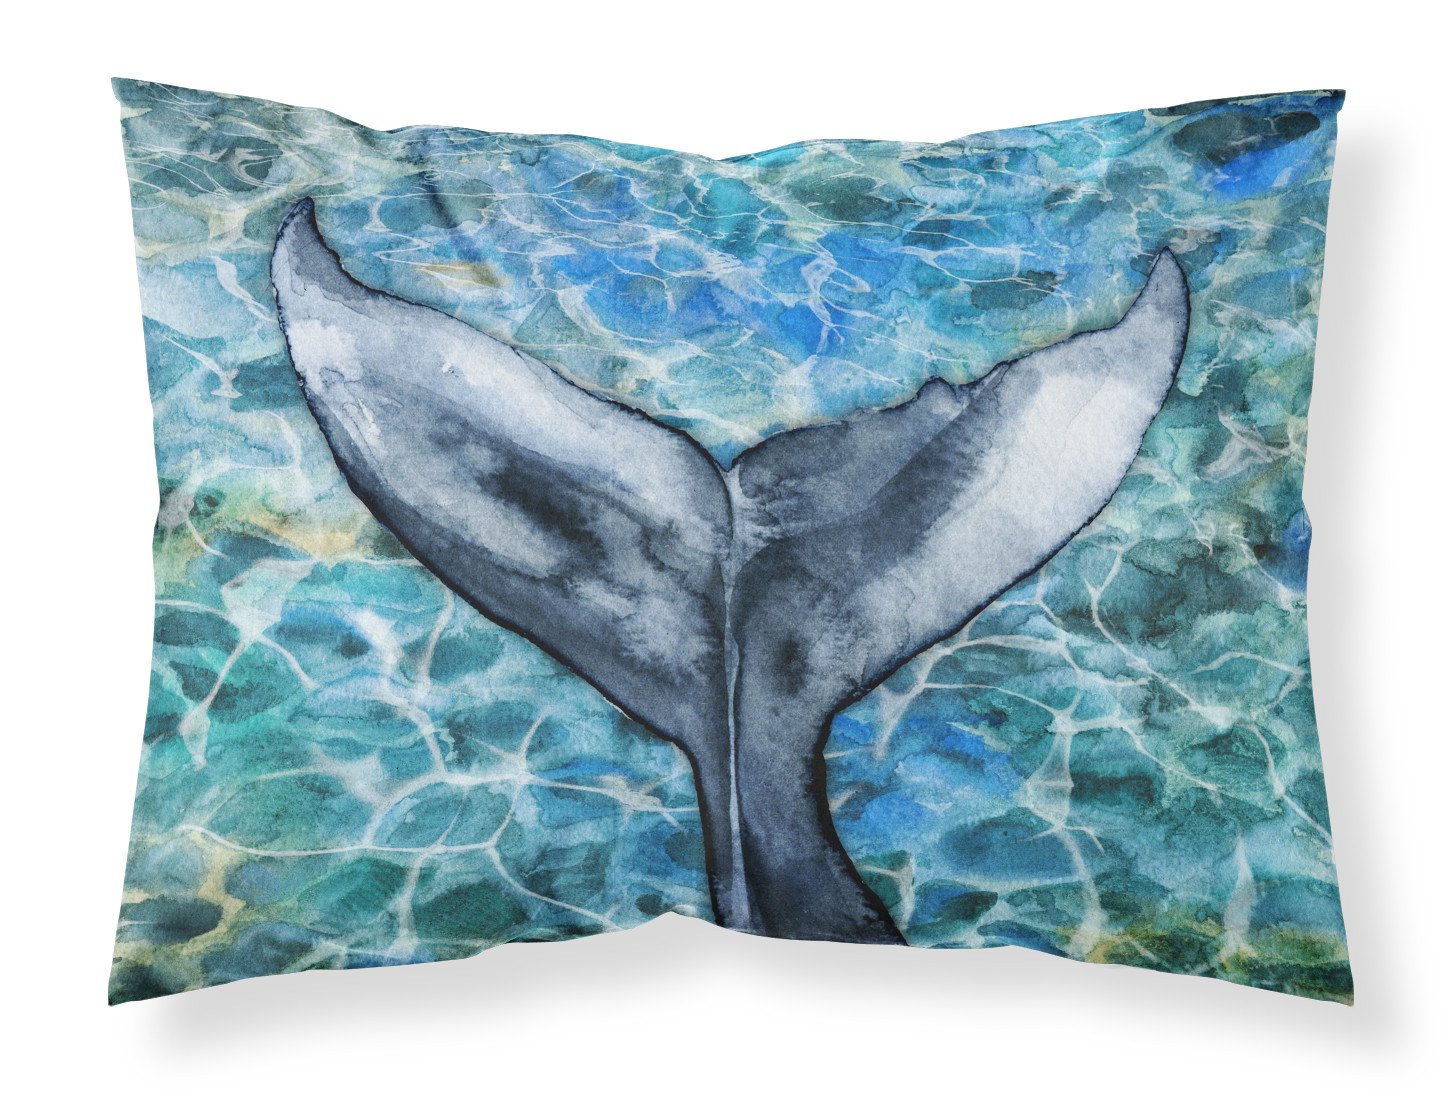 Whale Tail Fabric Standard Pillowcase BB5337PILLOWCASE by Caroline's Treasures